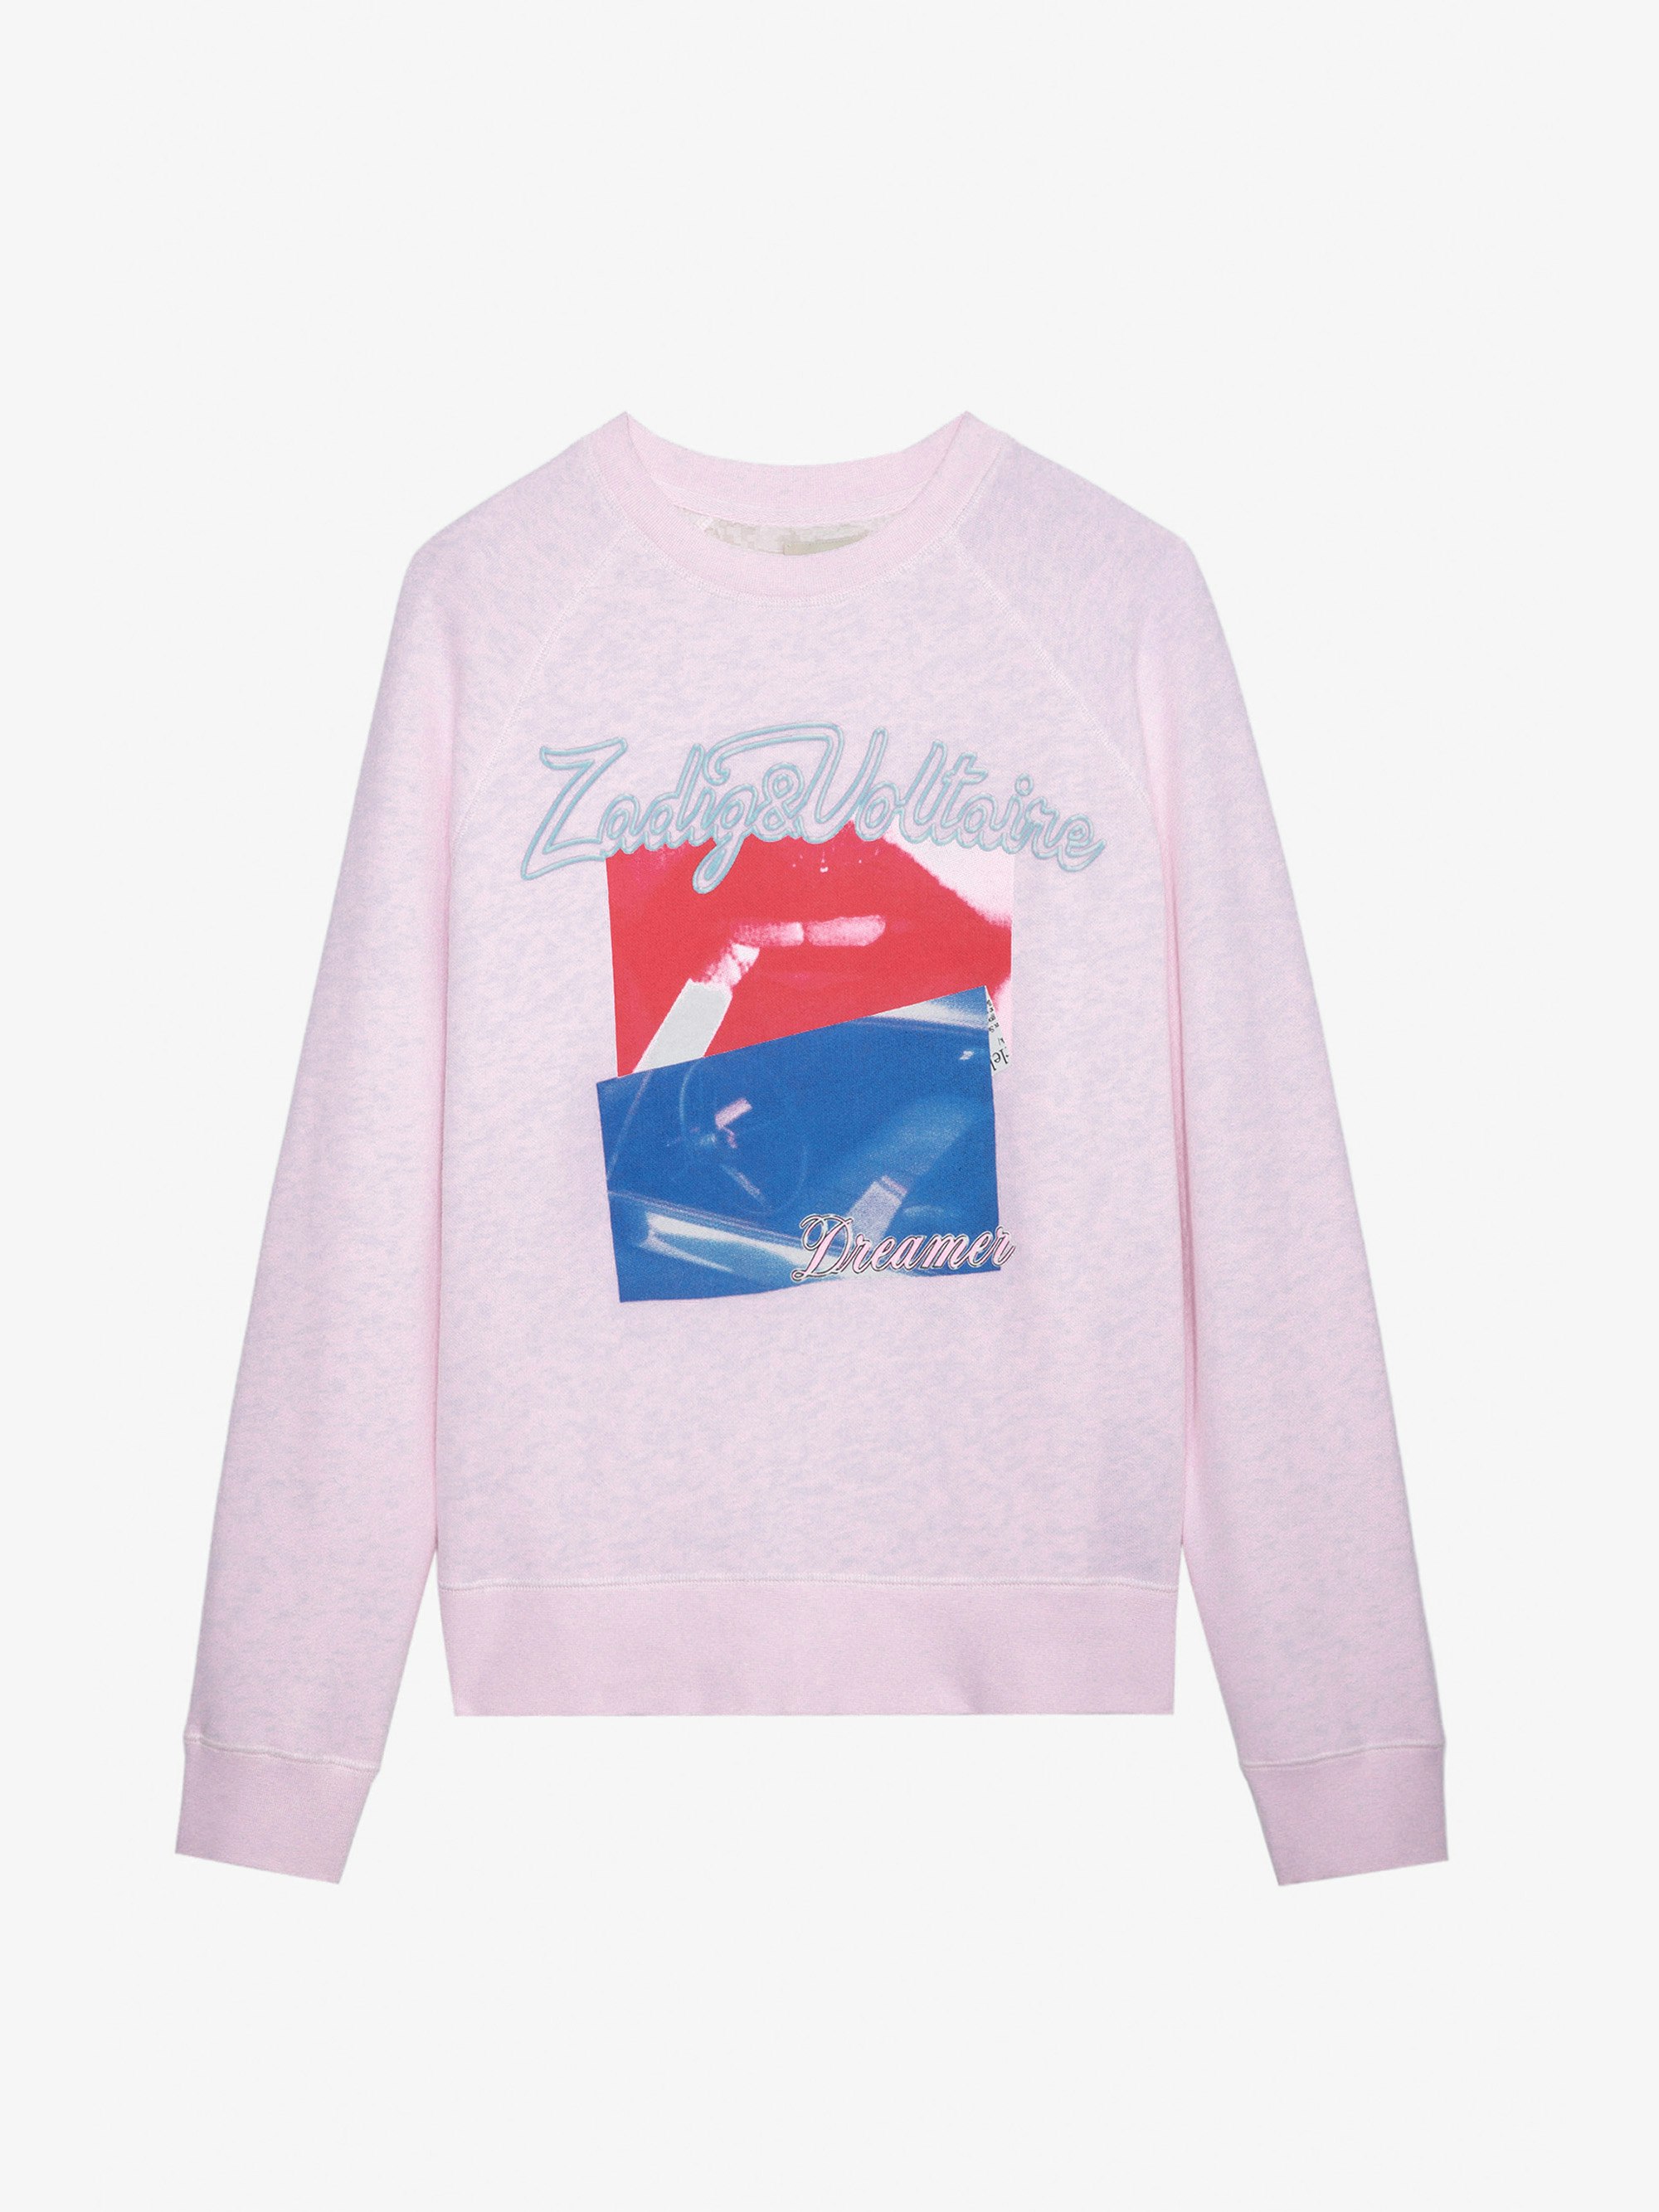 Upper Photoprint Sweatshirt - Women’s pink sweatshirt with photoprint on the front.